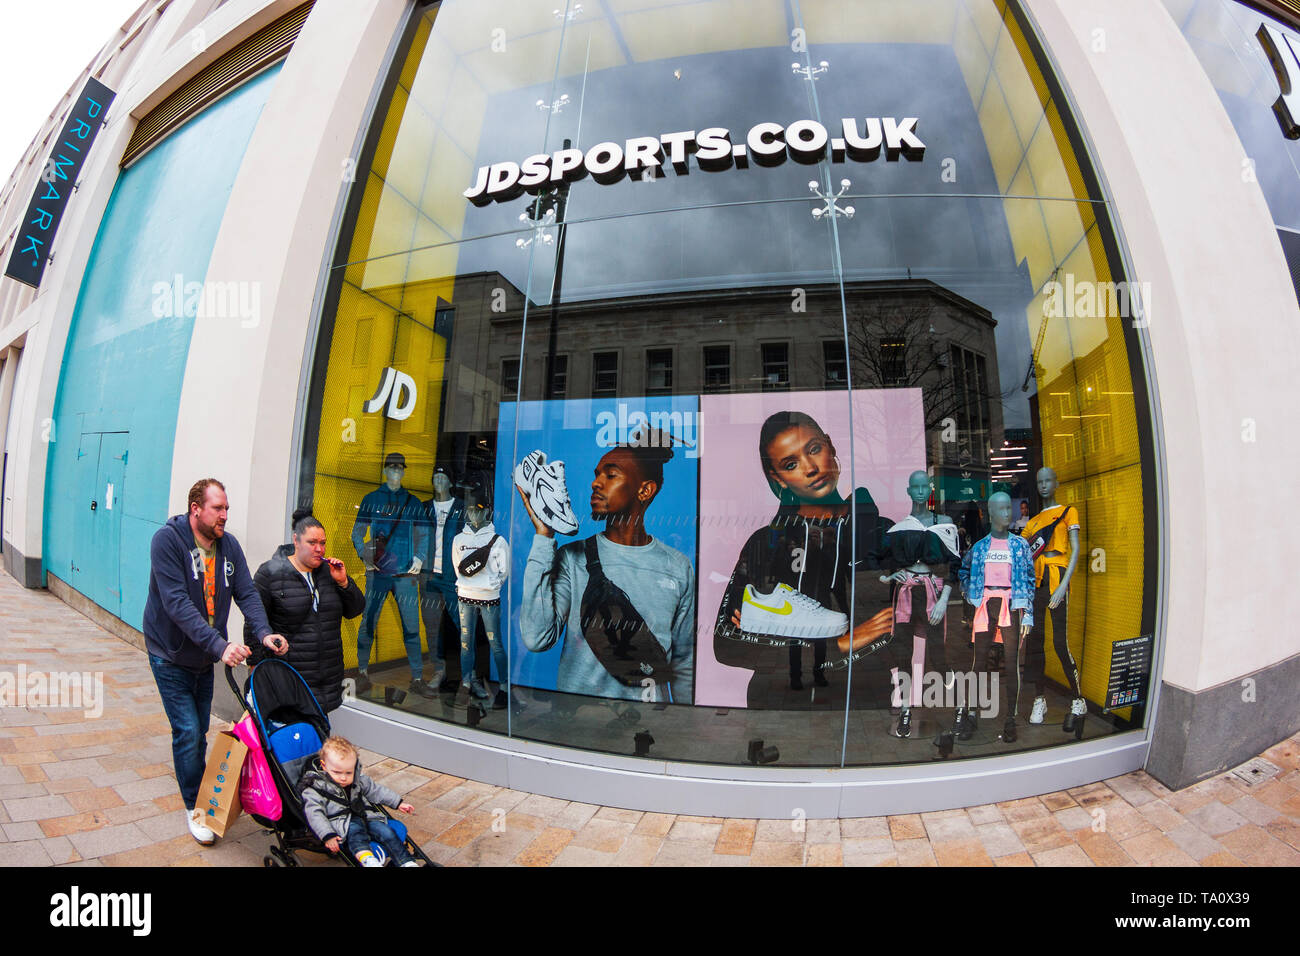 JD Sports, sports fashion store, fisheye view, Stock Photo